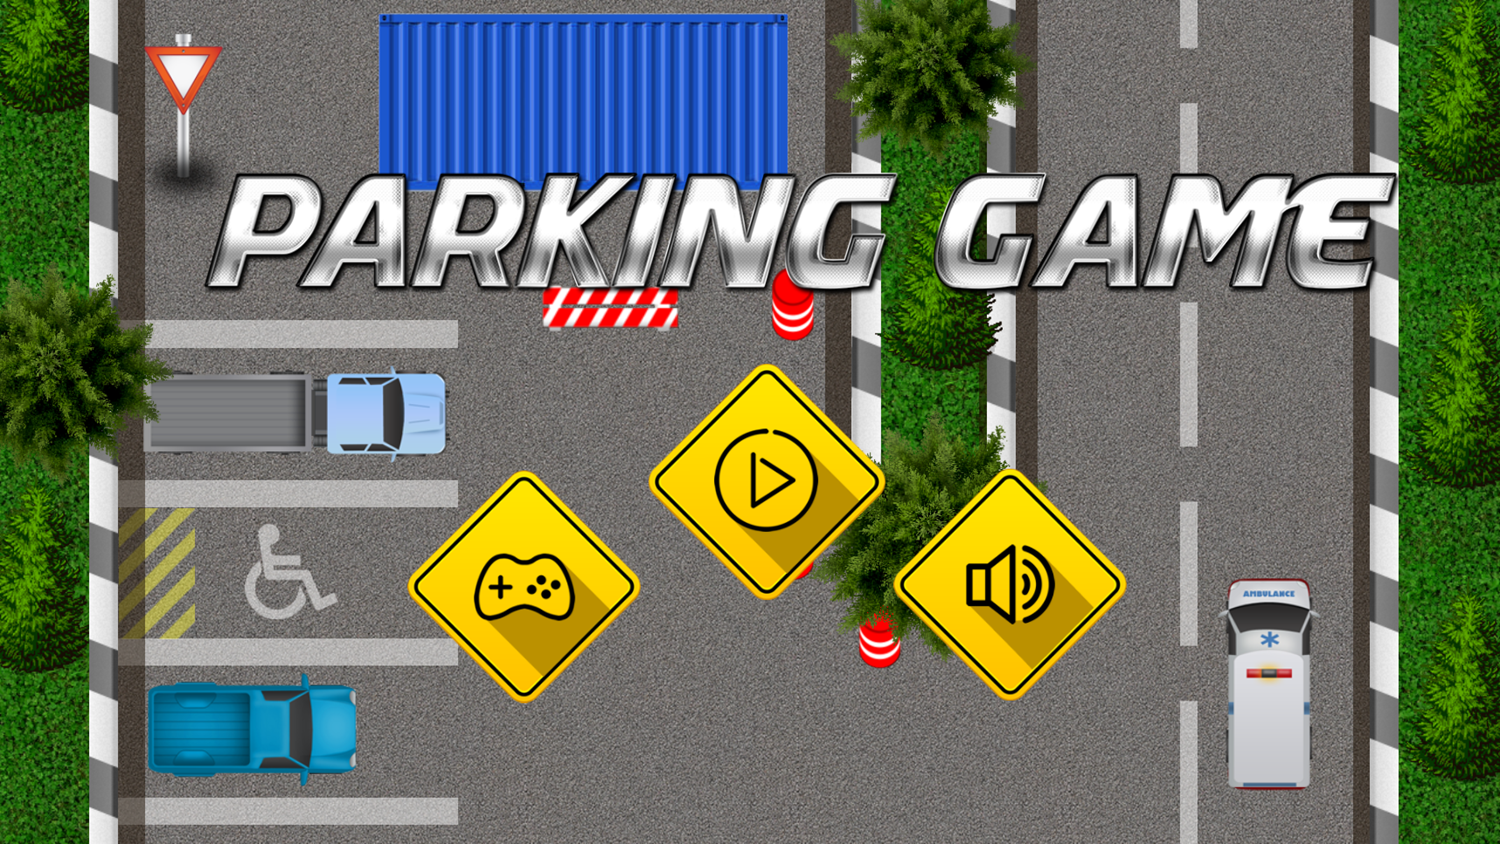 Parking Game Welcome Screen Screenshot.